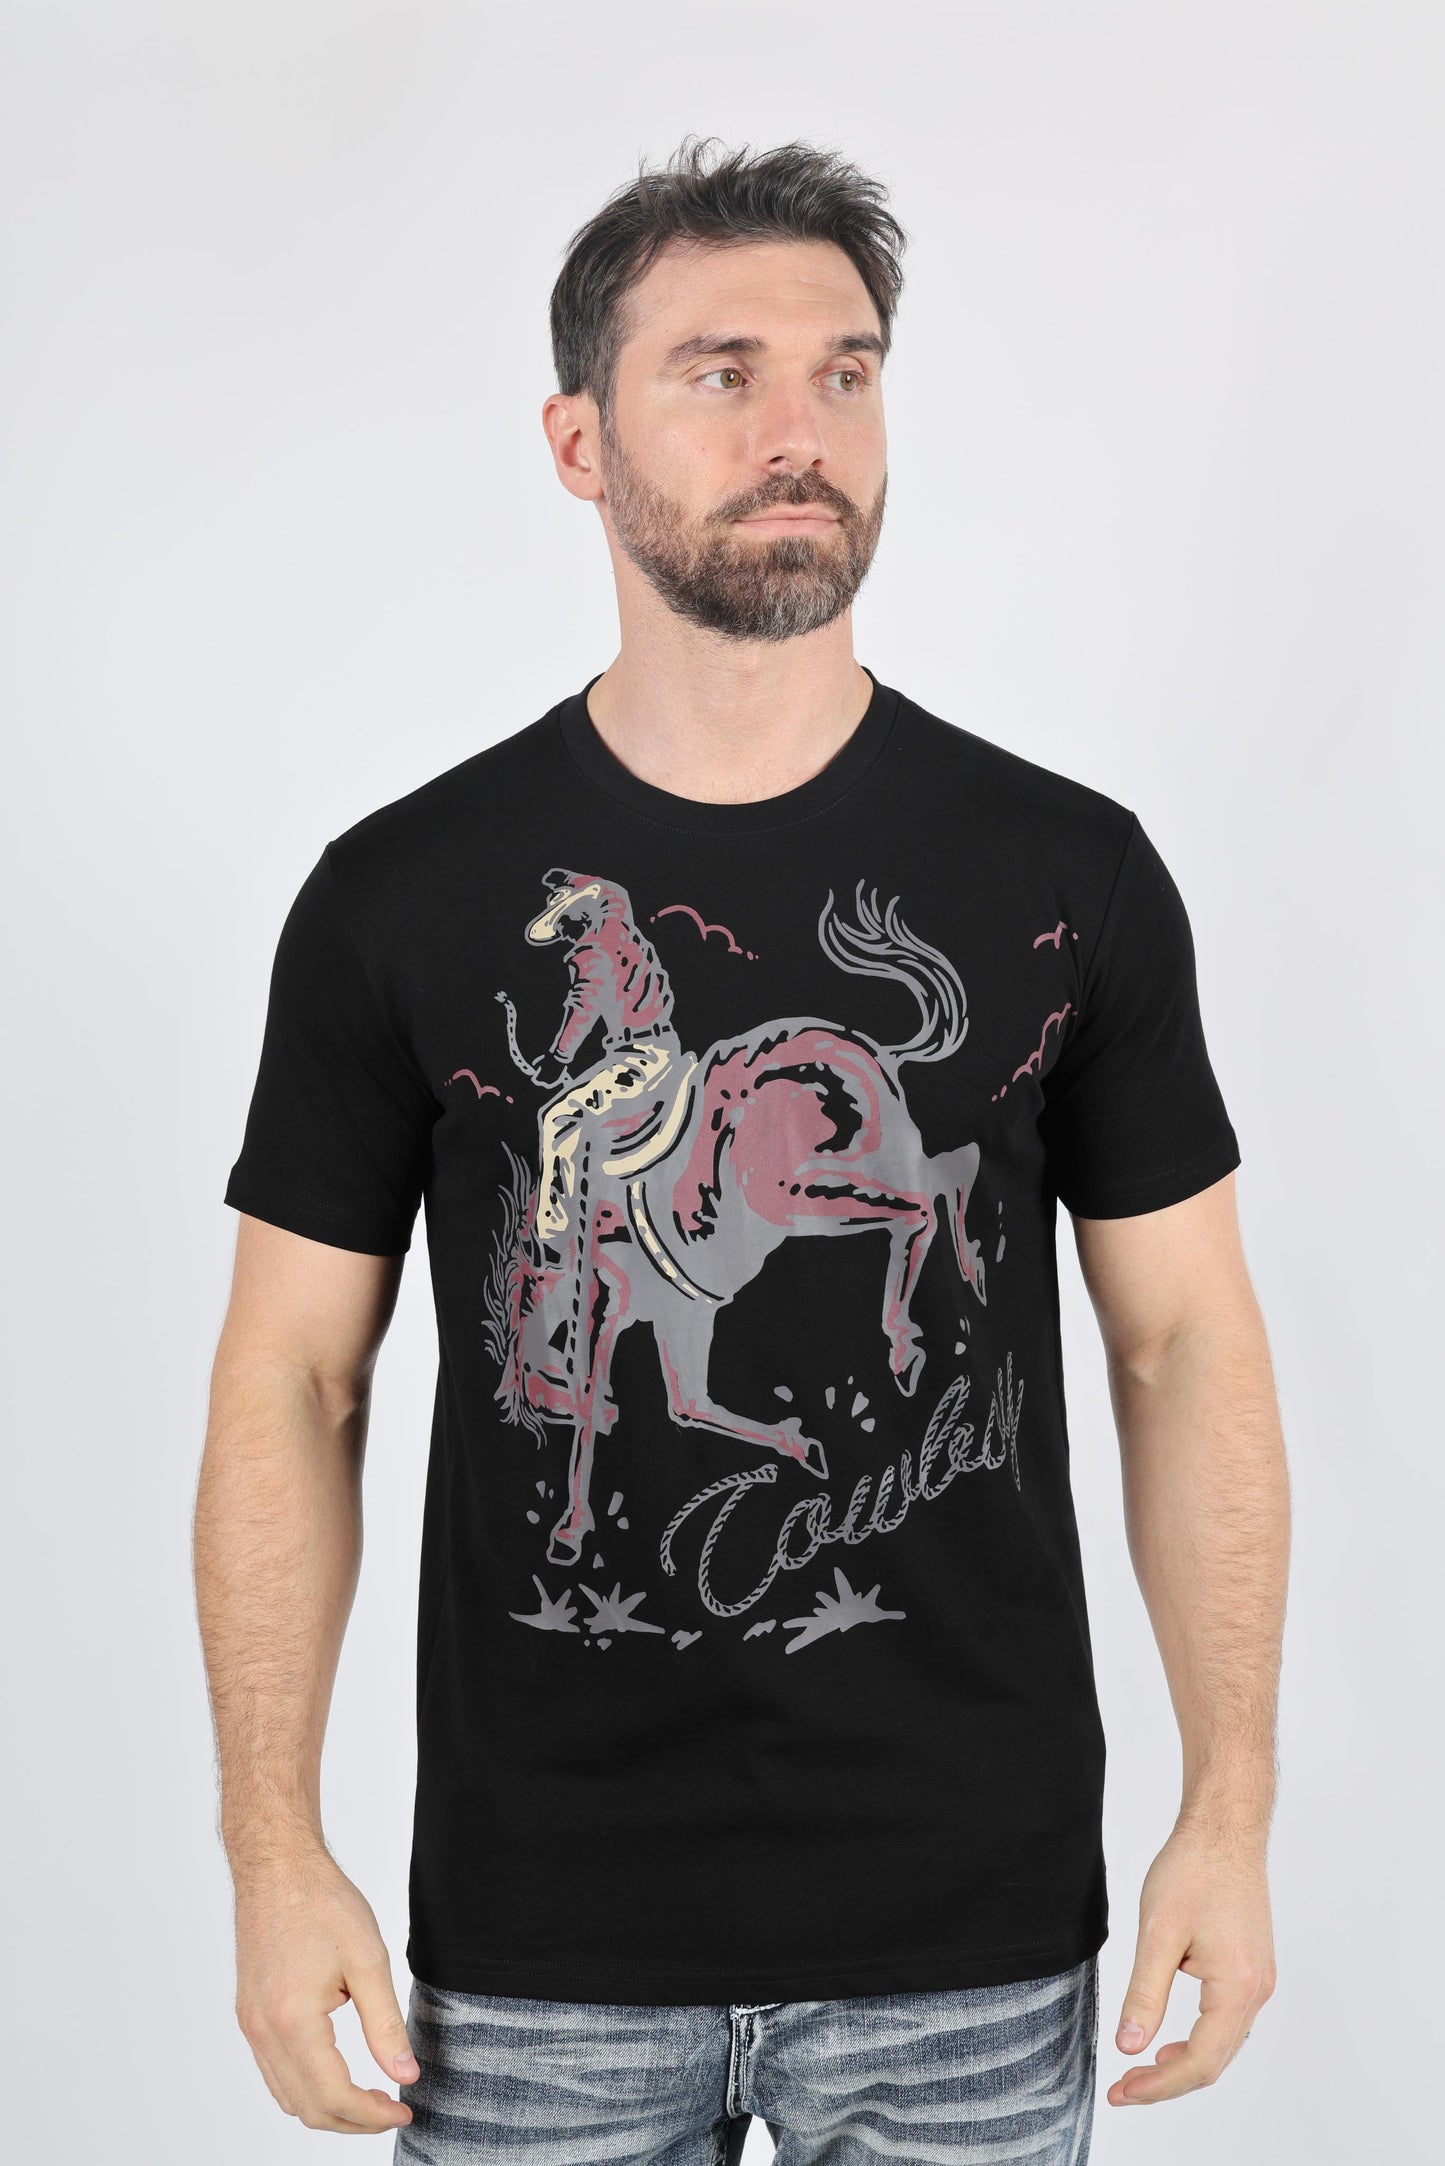 Mens Modern Fit Cotton Stretch Horse-Rider Print T-Shirt